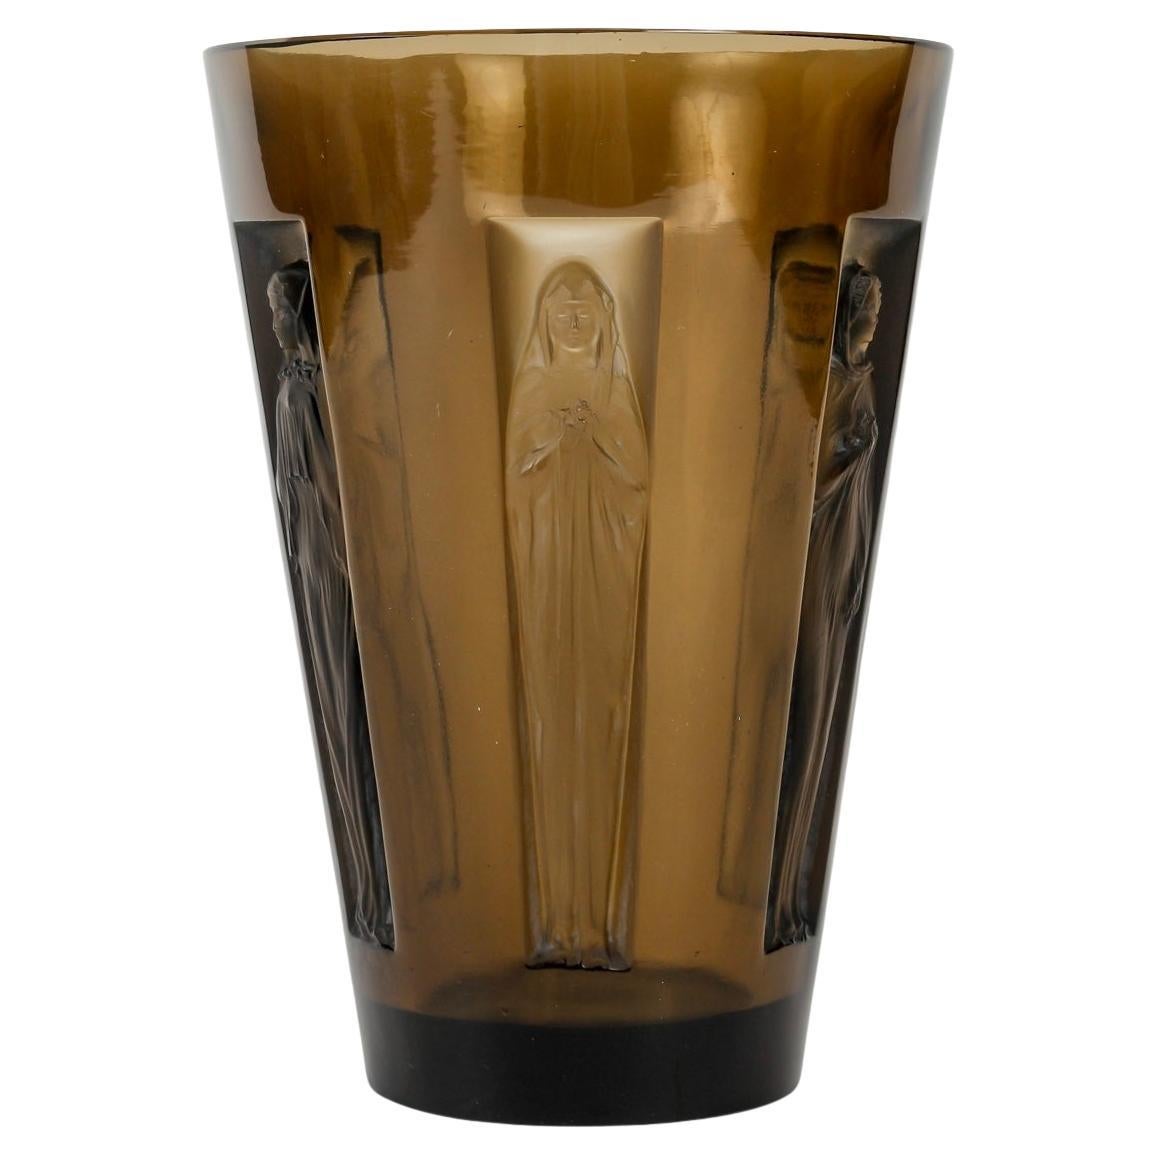 1912 René Lalique - Vase Gobelet Six Figures Smoked Topaz Glass